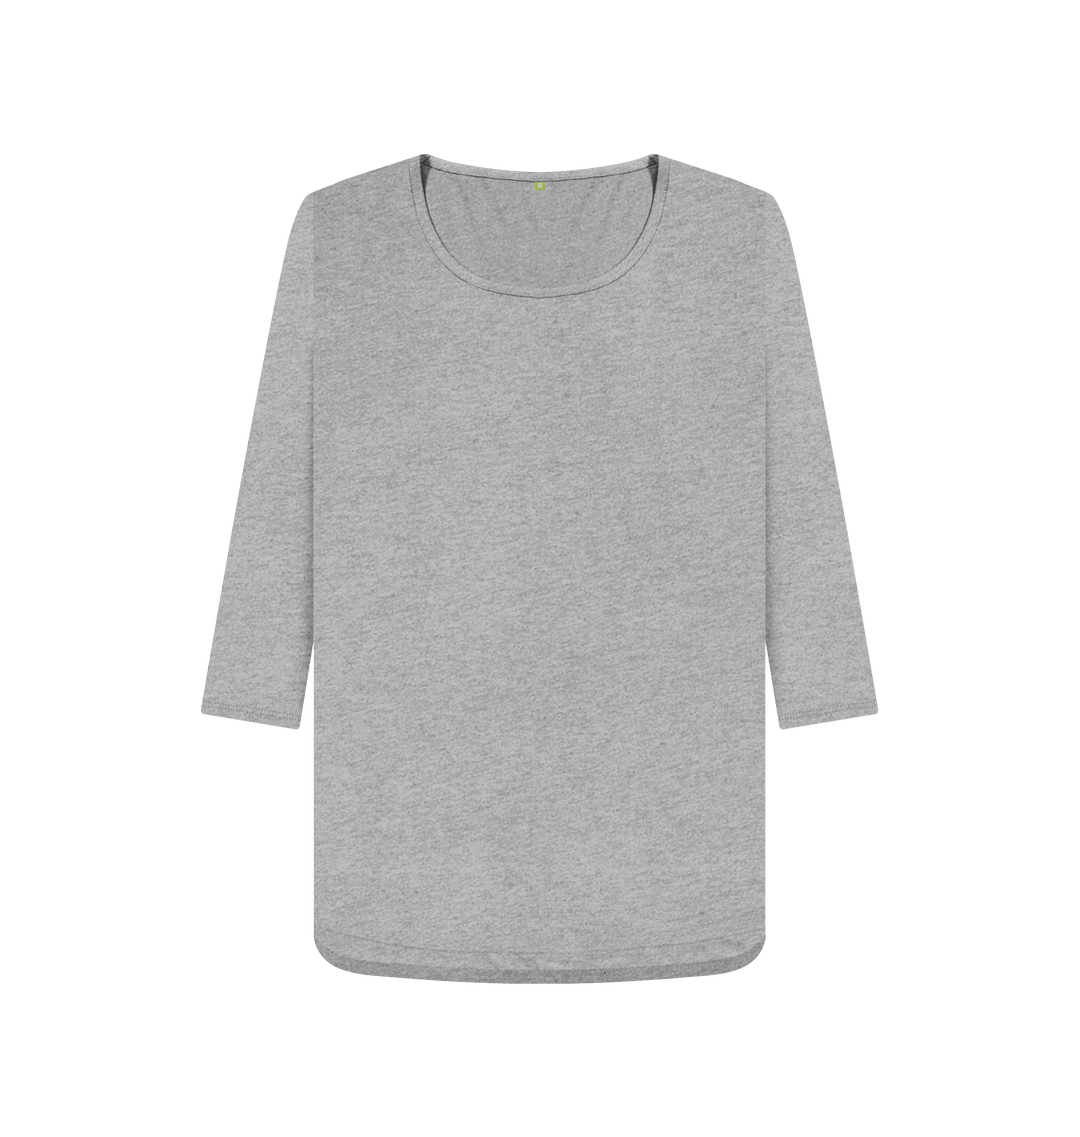 Women's Grey 3/4 Sleeve Top - Printed T - shirt